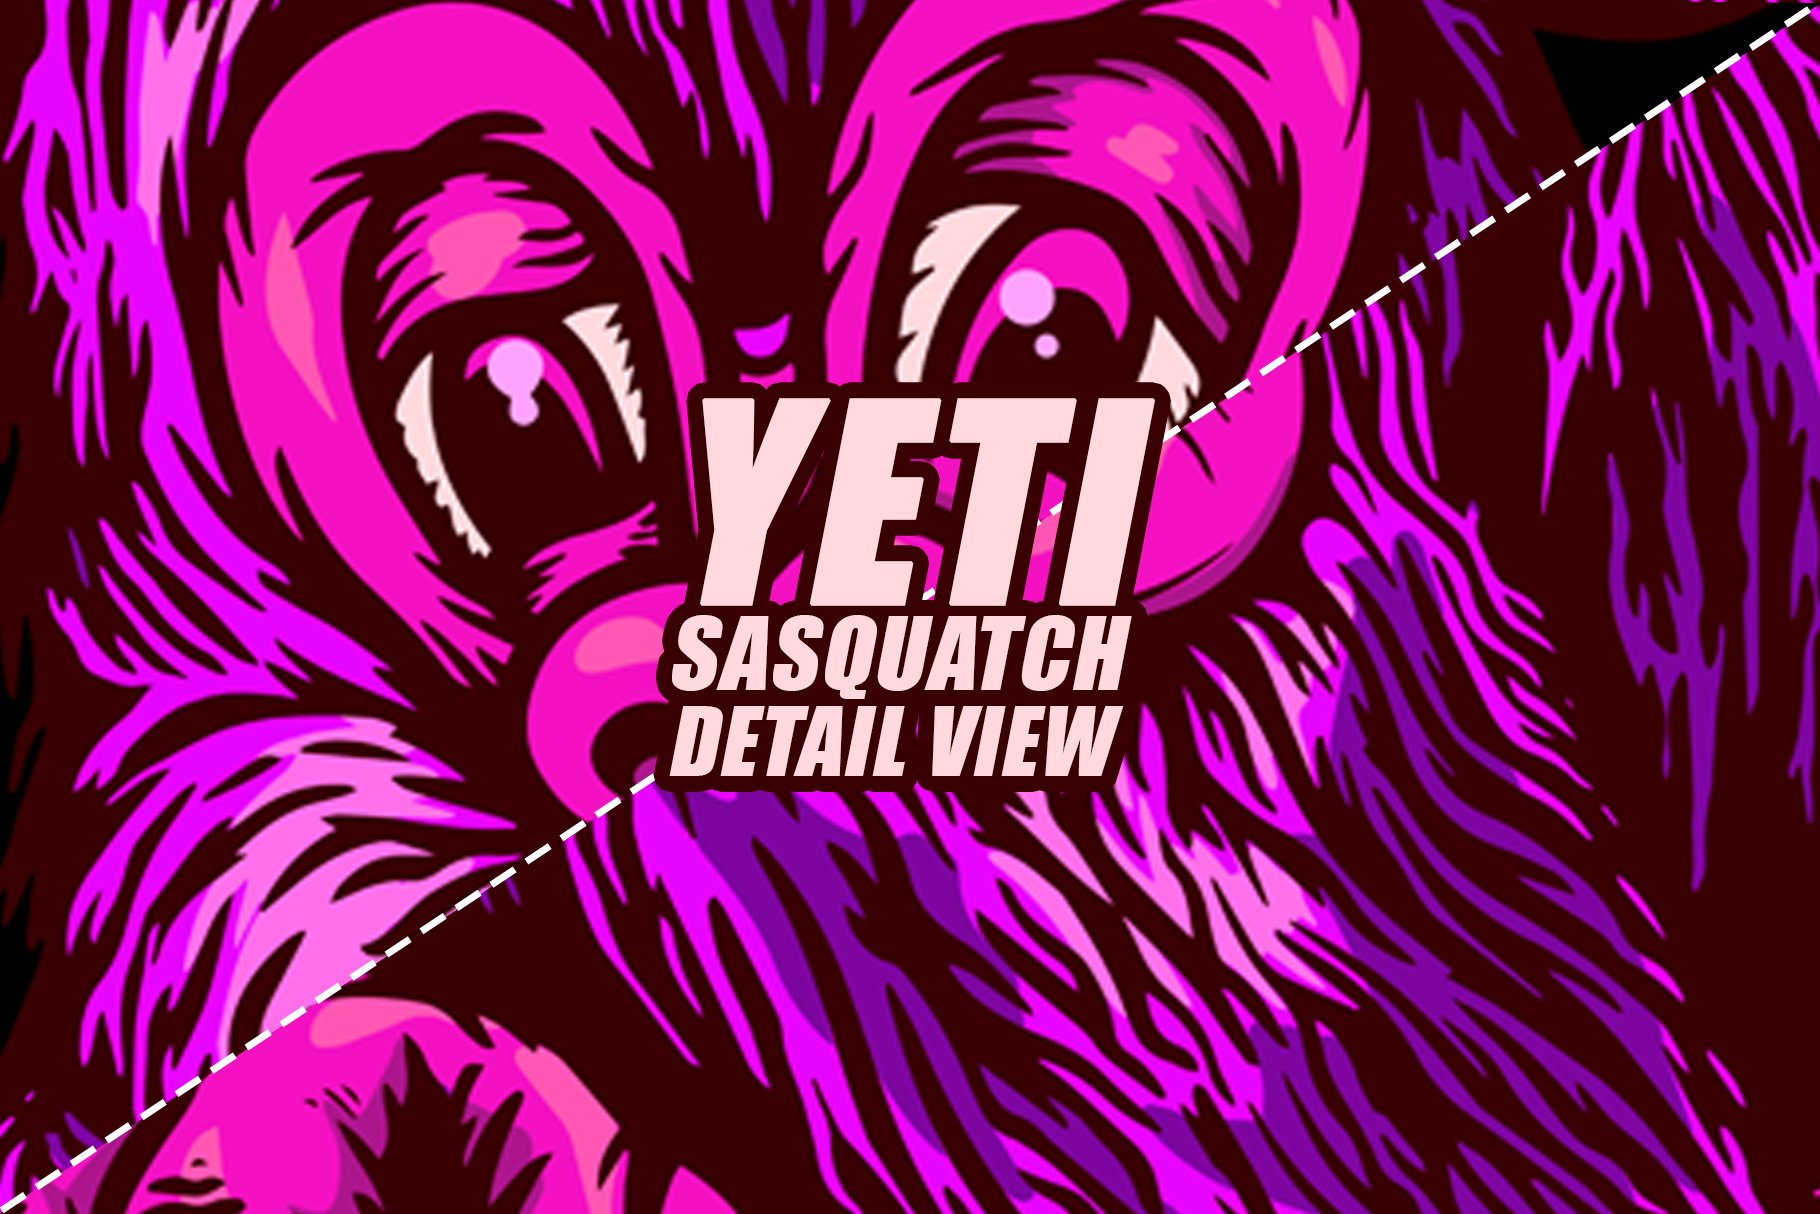 Yeti Sasquatch illustration preview image.